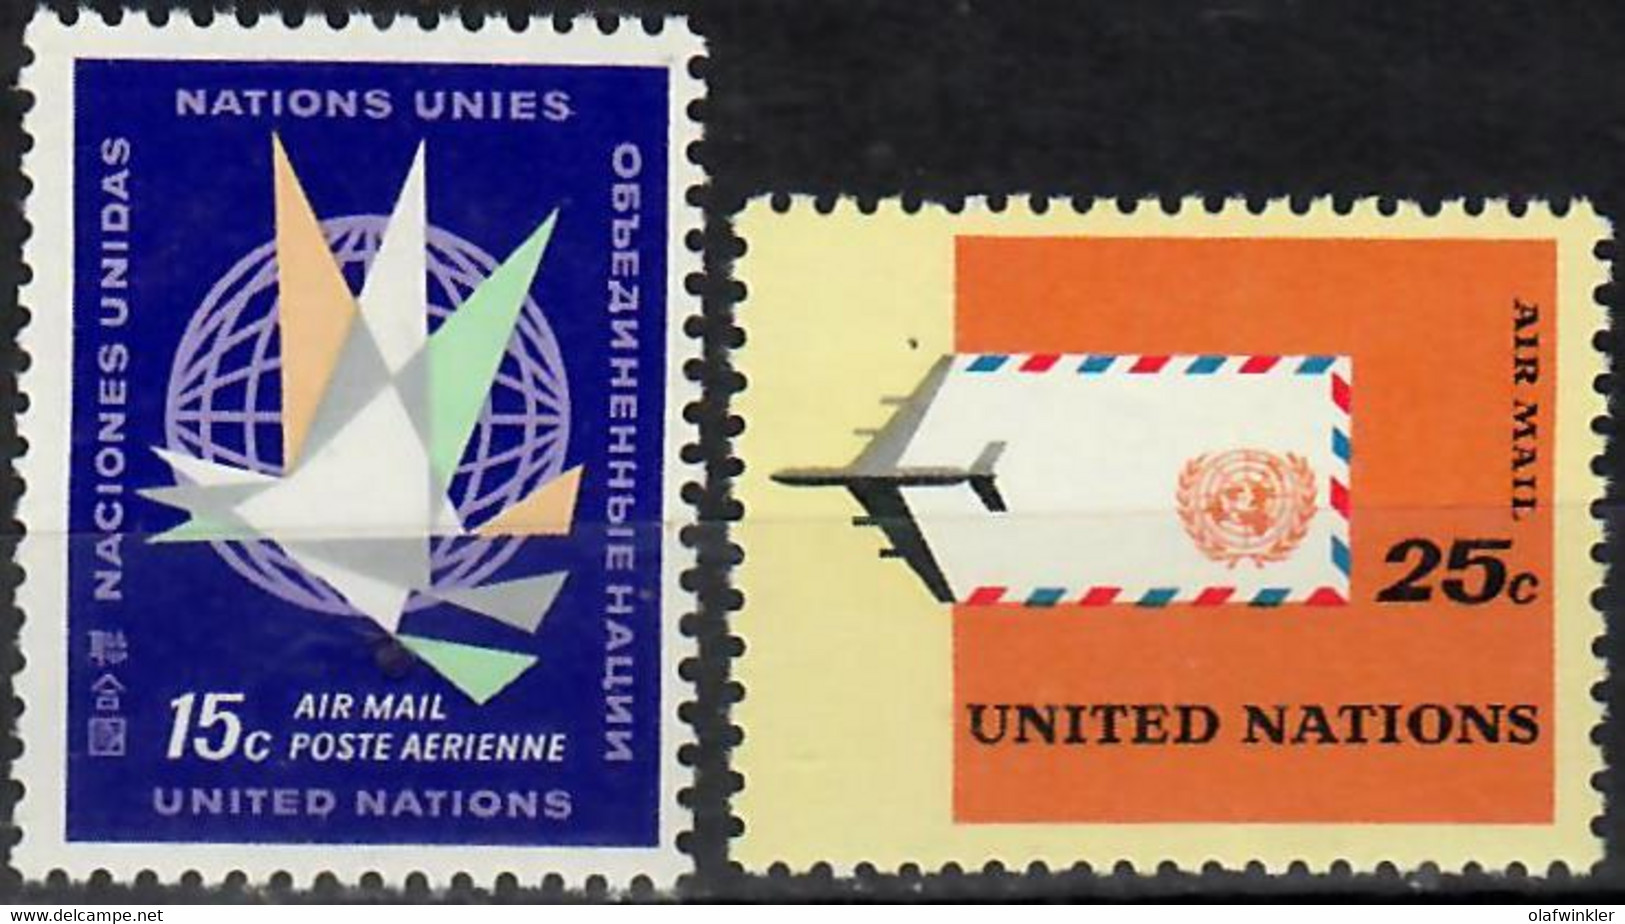 1964 Air Mail Sc C11-12 / YT A 11-12 / Mi 131-2 MNH / Neuf Sans Charniere / Postfrisch [zro] - Posta Aerea